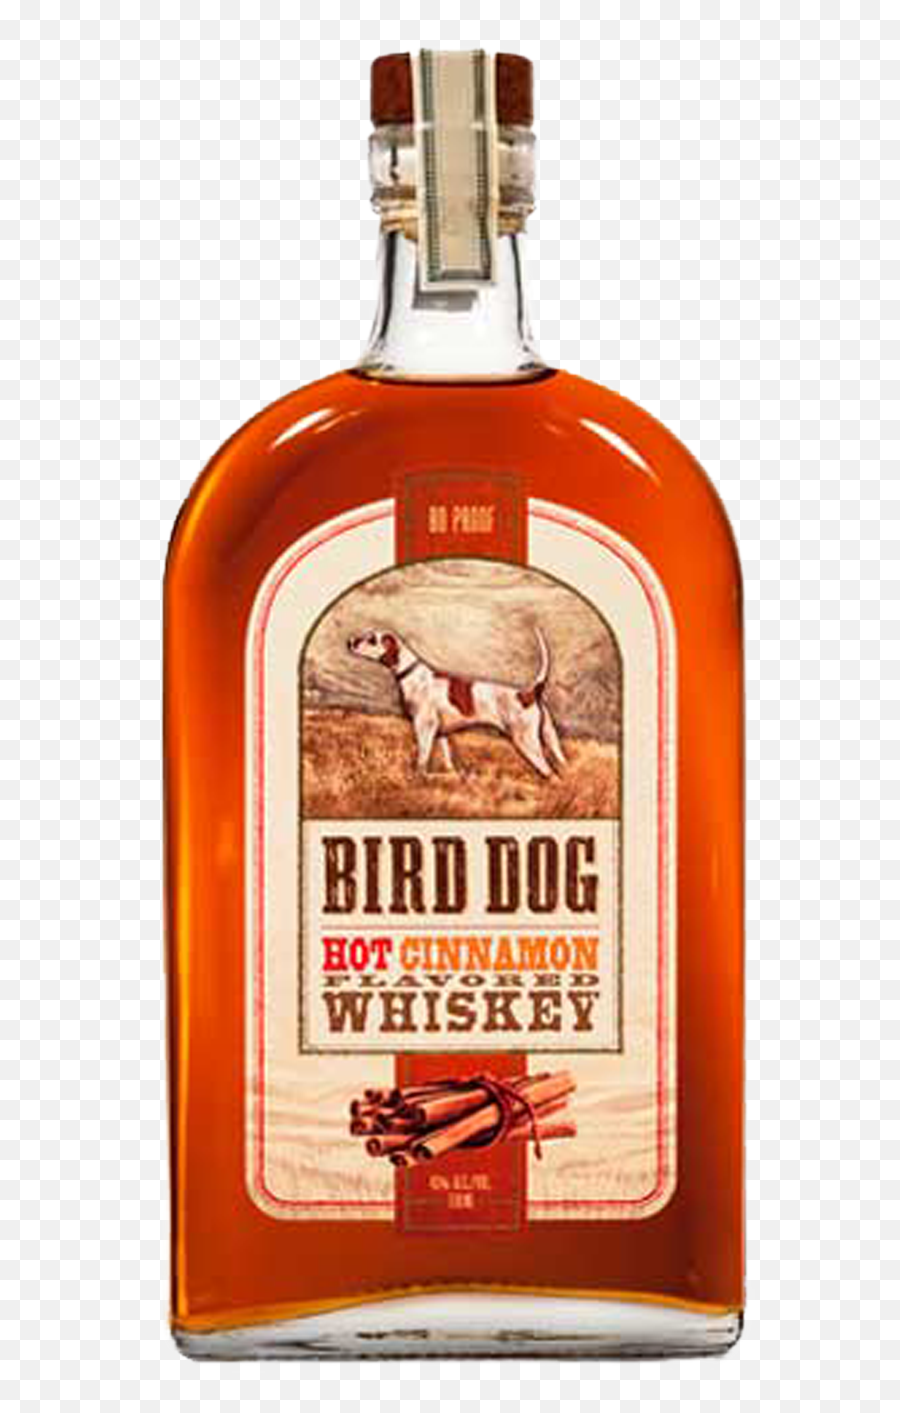 Buy Bird Dog Hot Cinnamon Flavored Whiskey Online - Whiskey Emoji,Fireball Whiskey Png